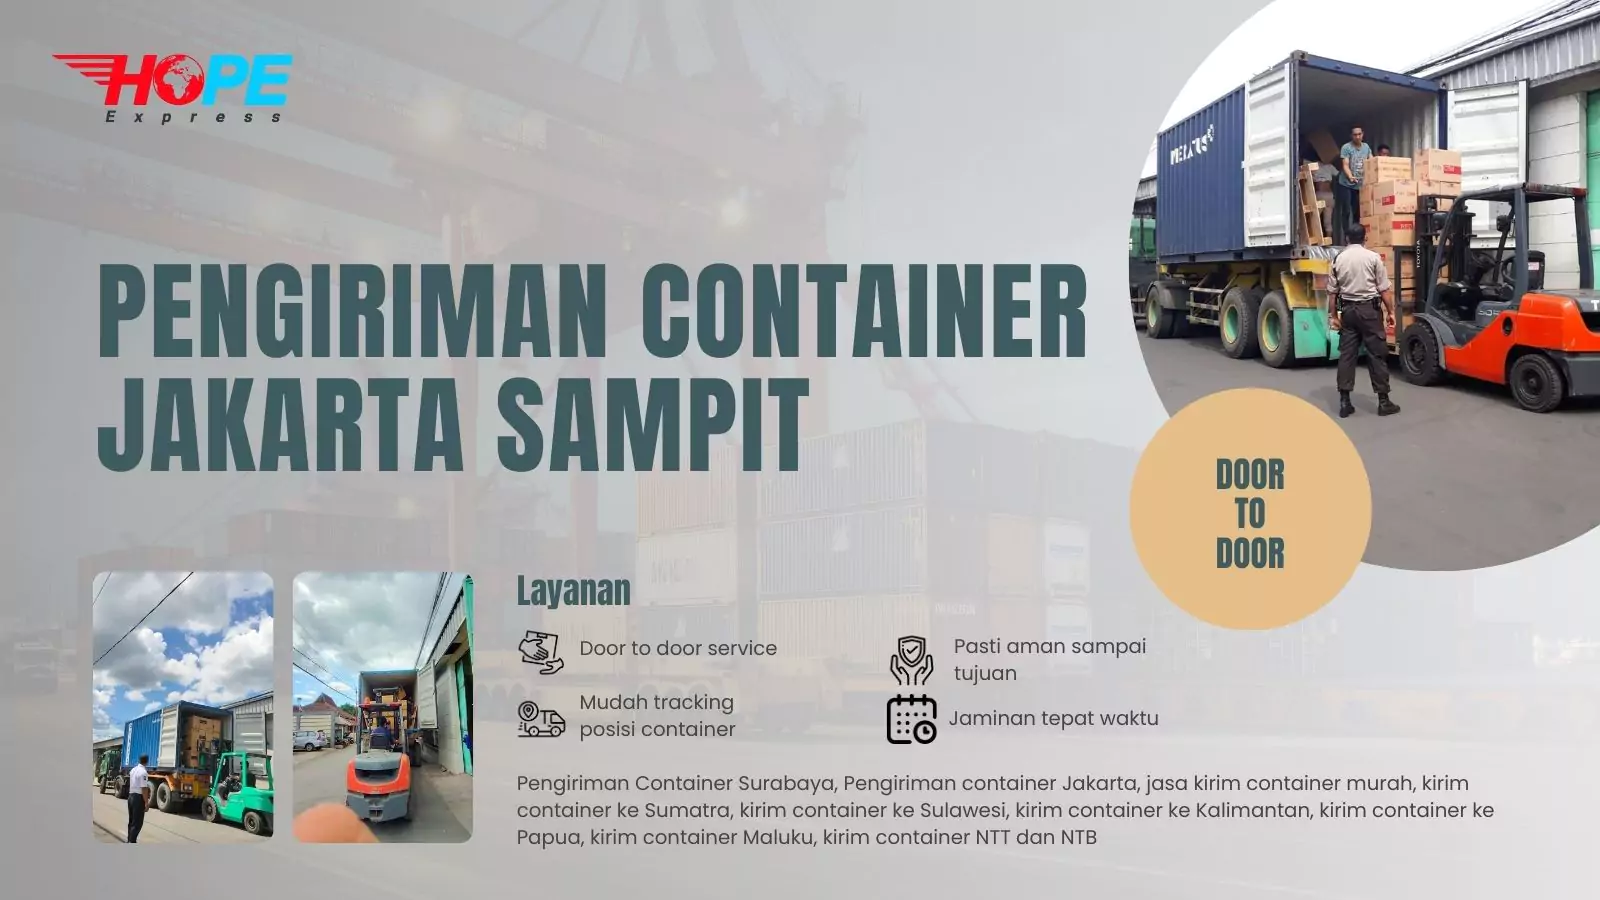 Pengiriman Container Jakarta Sampit